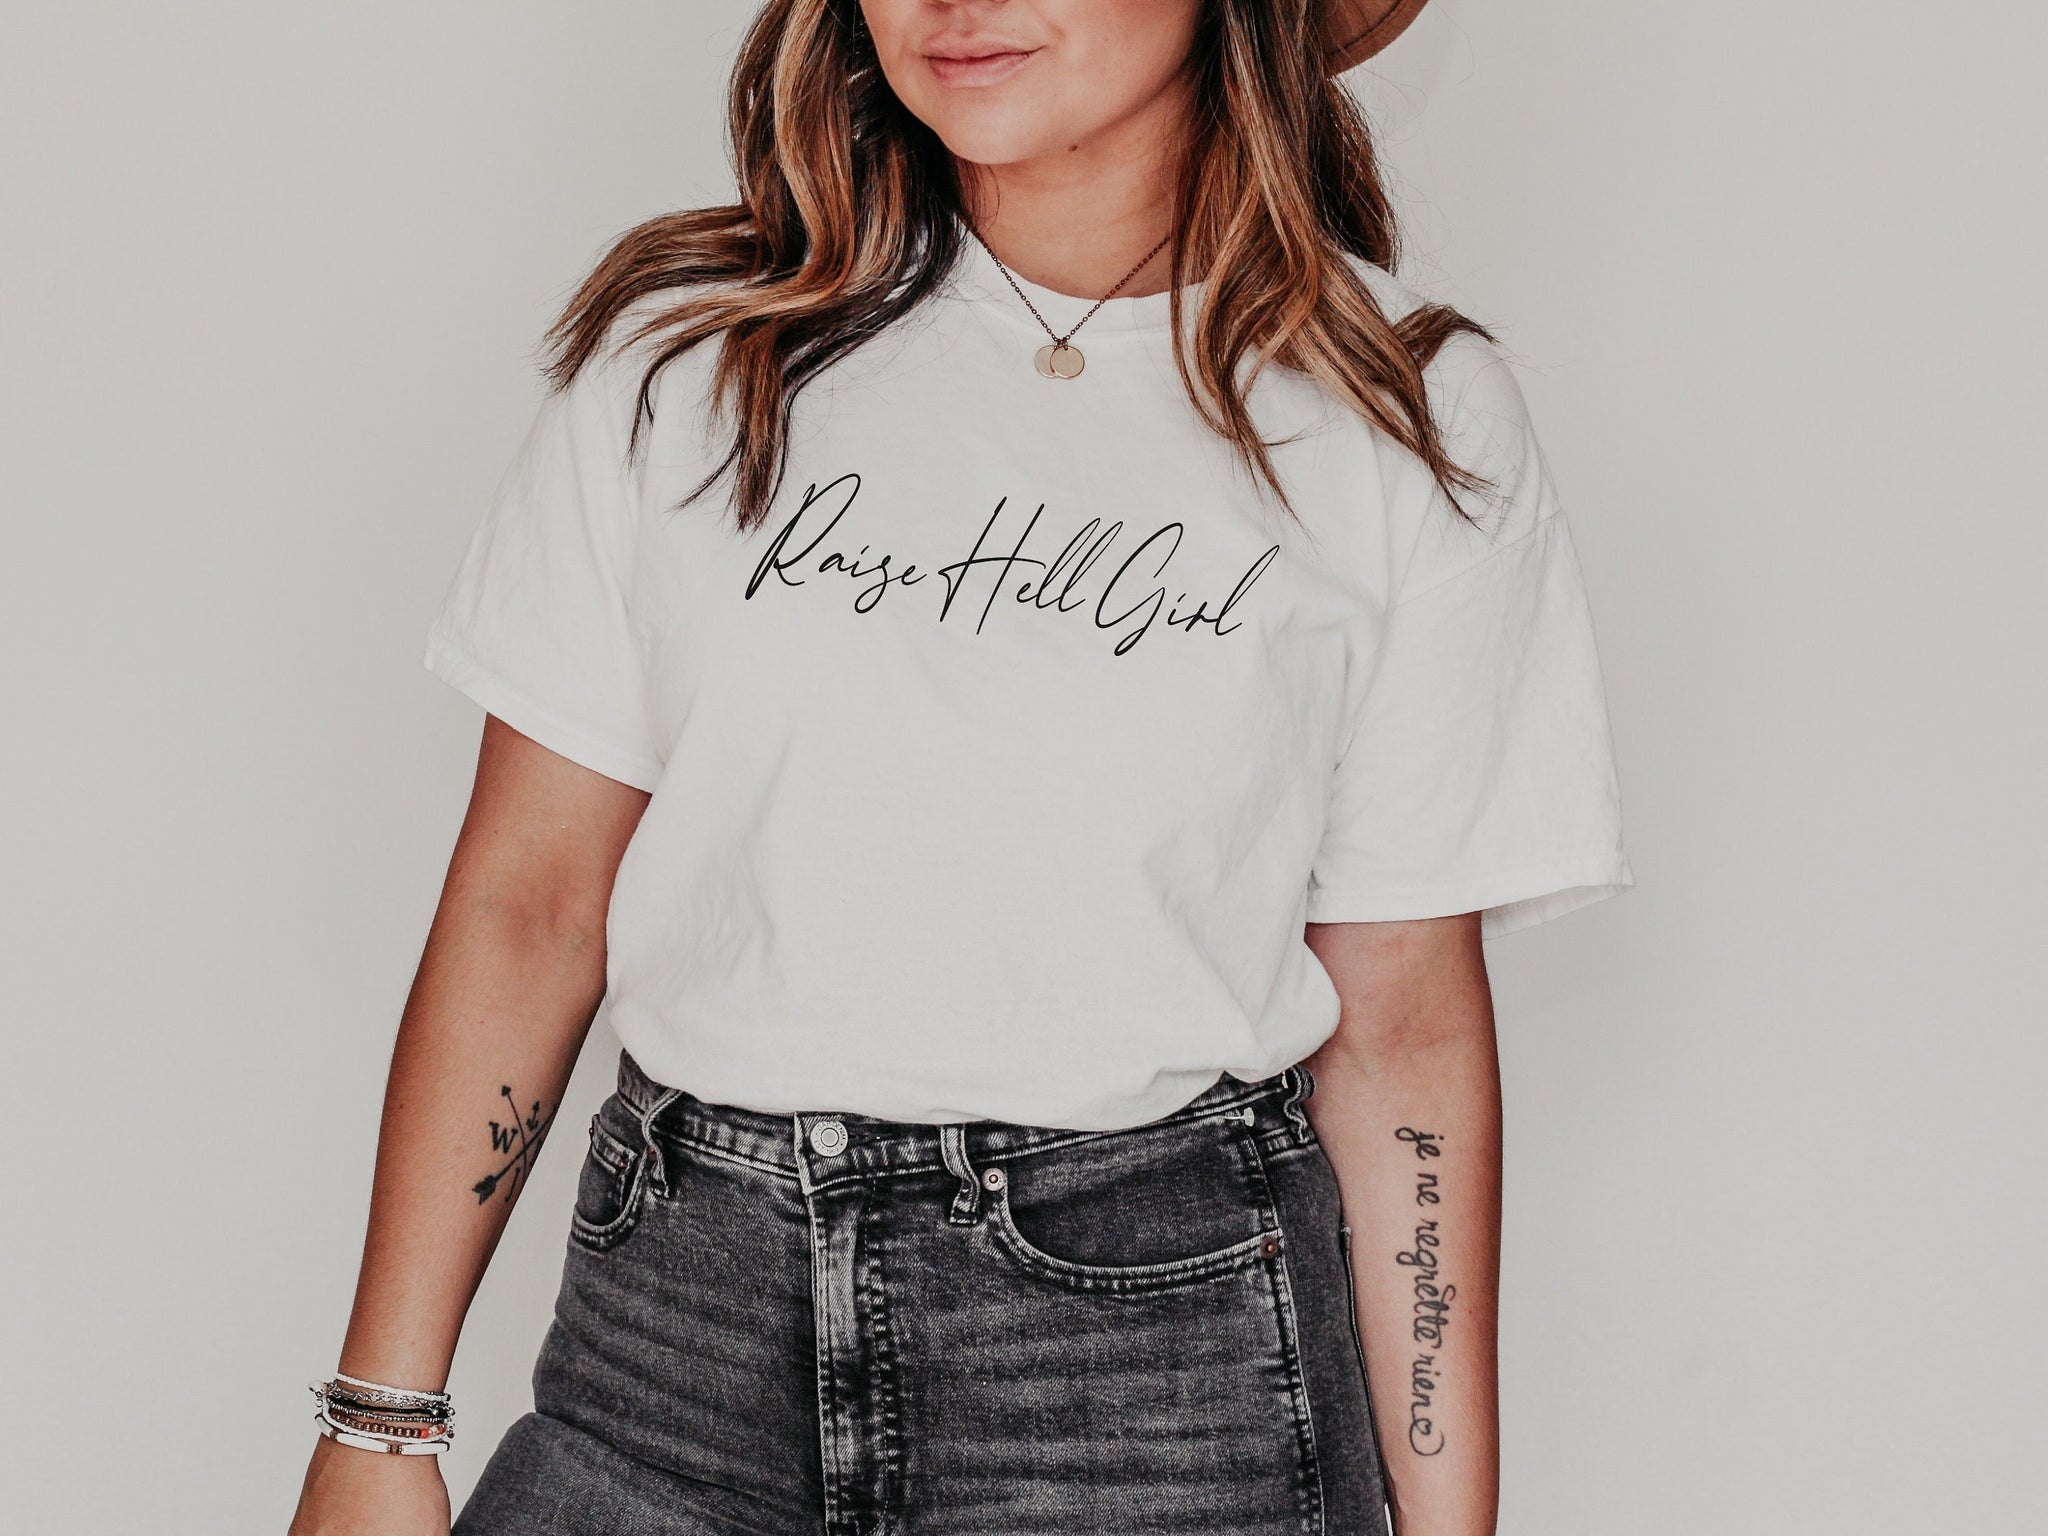 Raise Hell Girl Graphic Tee | Women Empowerment Tshirt | Affirmation Shirt | Gift for Her